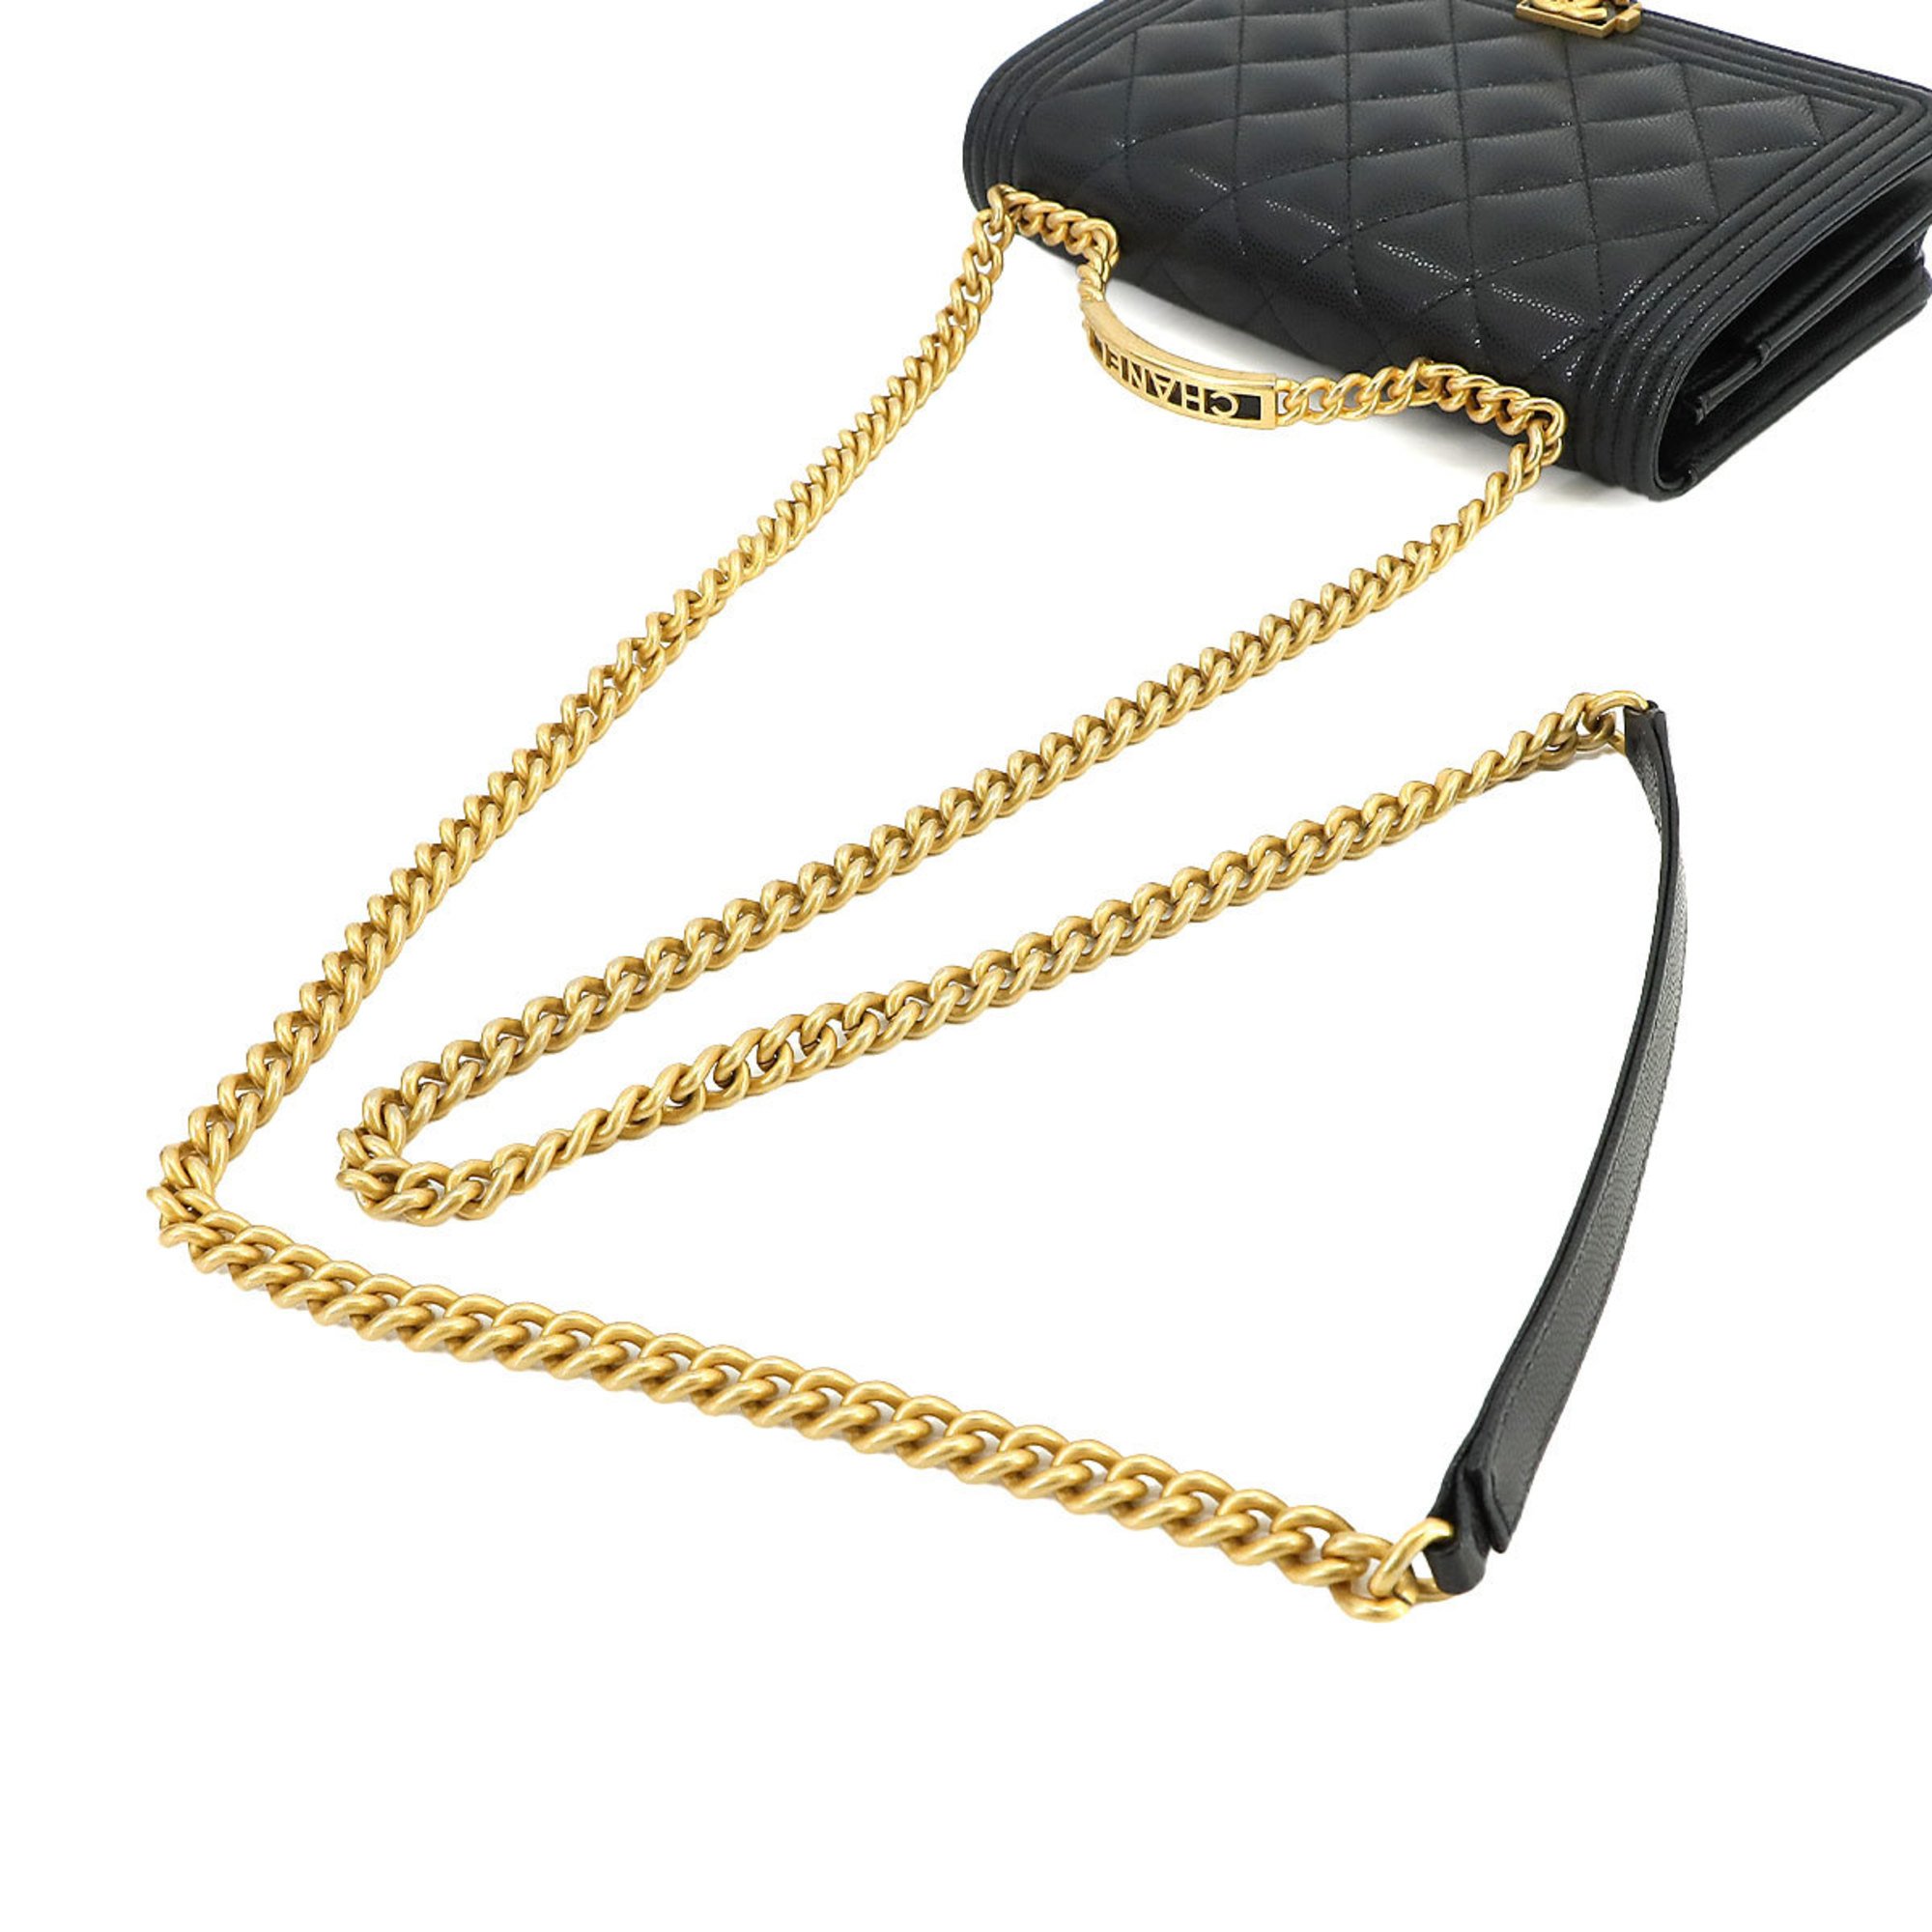 CHANEL Boy Chanel Chain Wallet Long Caviar Skin Black Gold Metal Fittings